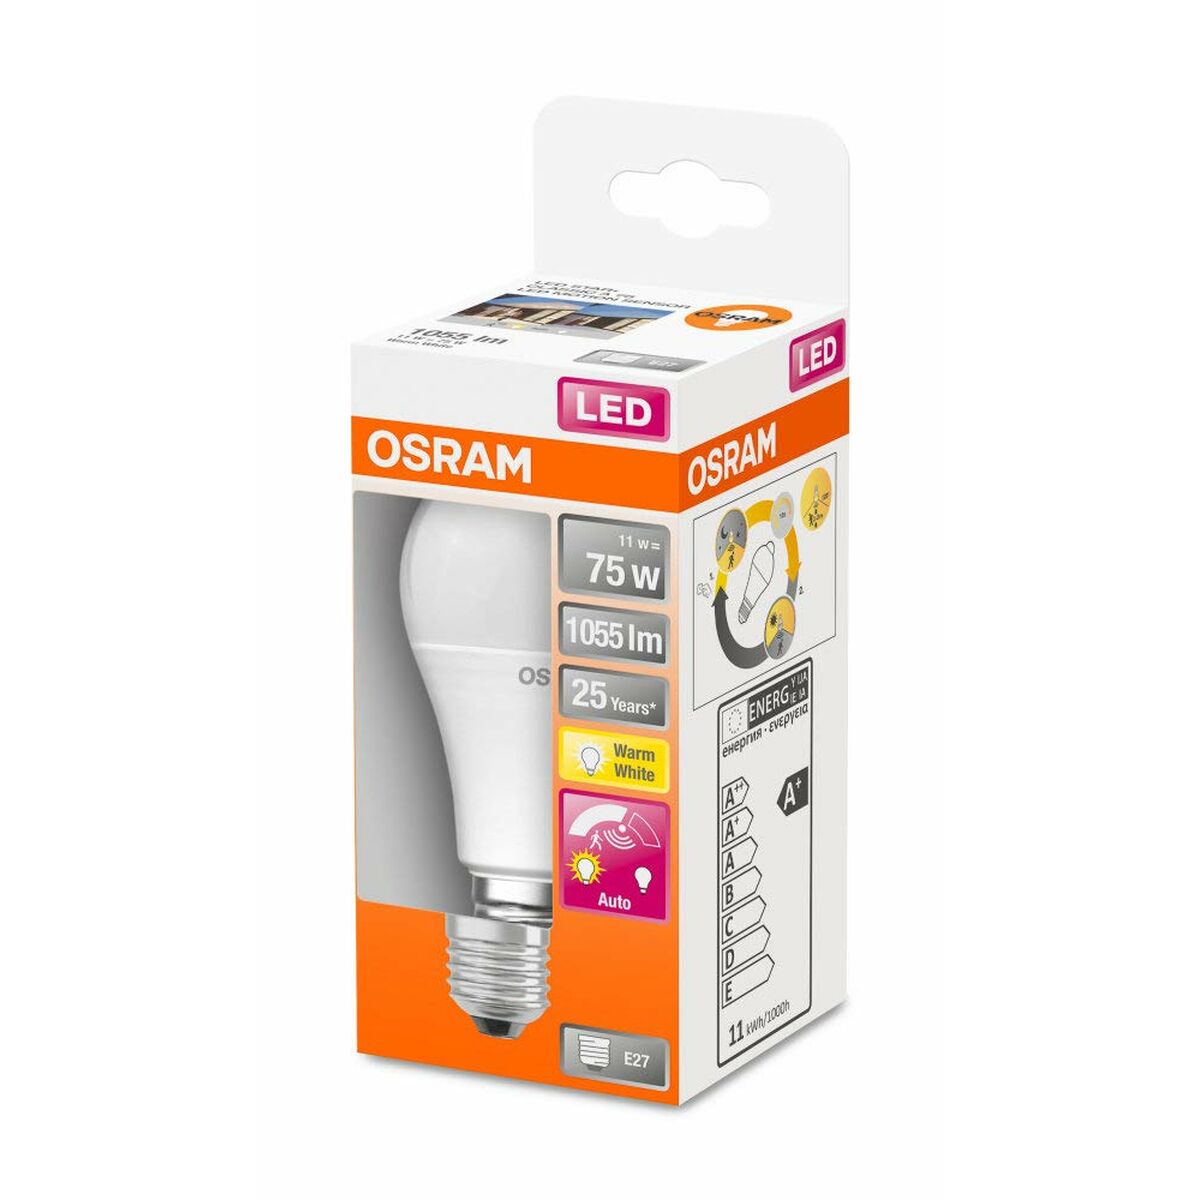 LED lamp Osram E27 11 W (Refurbished A+)